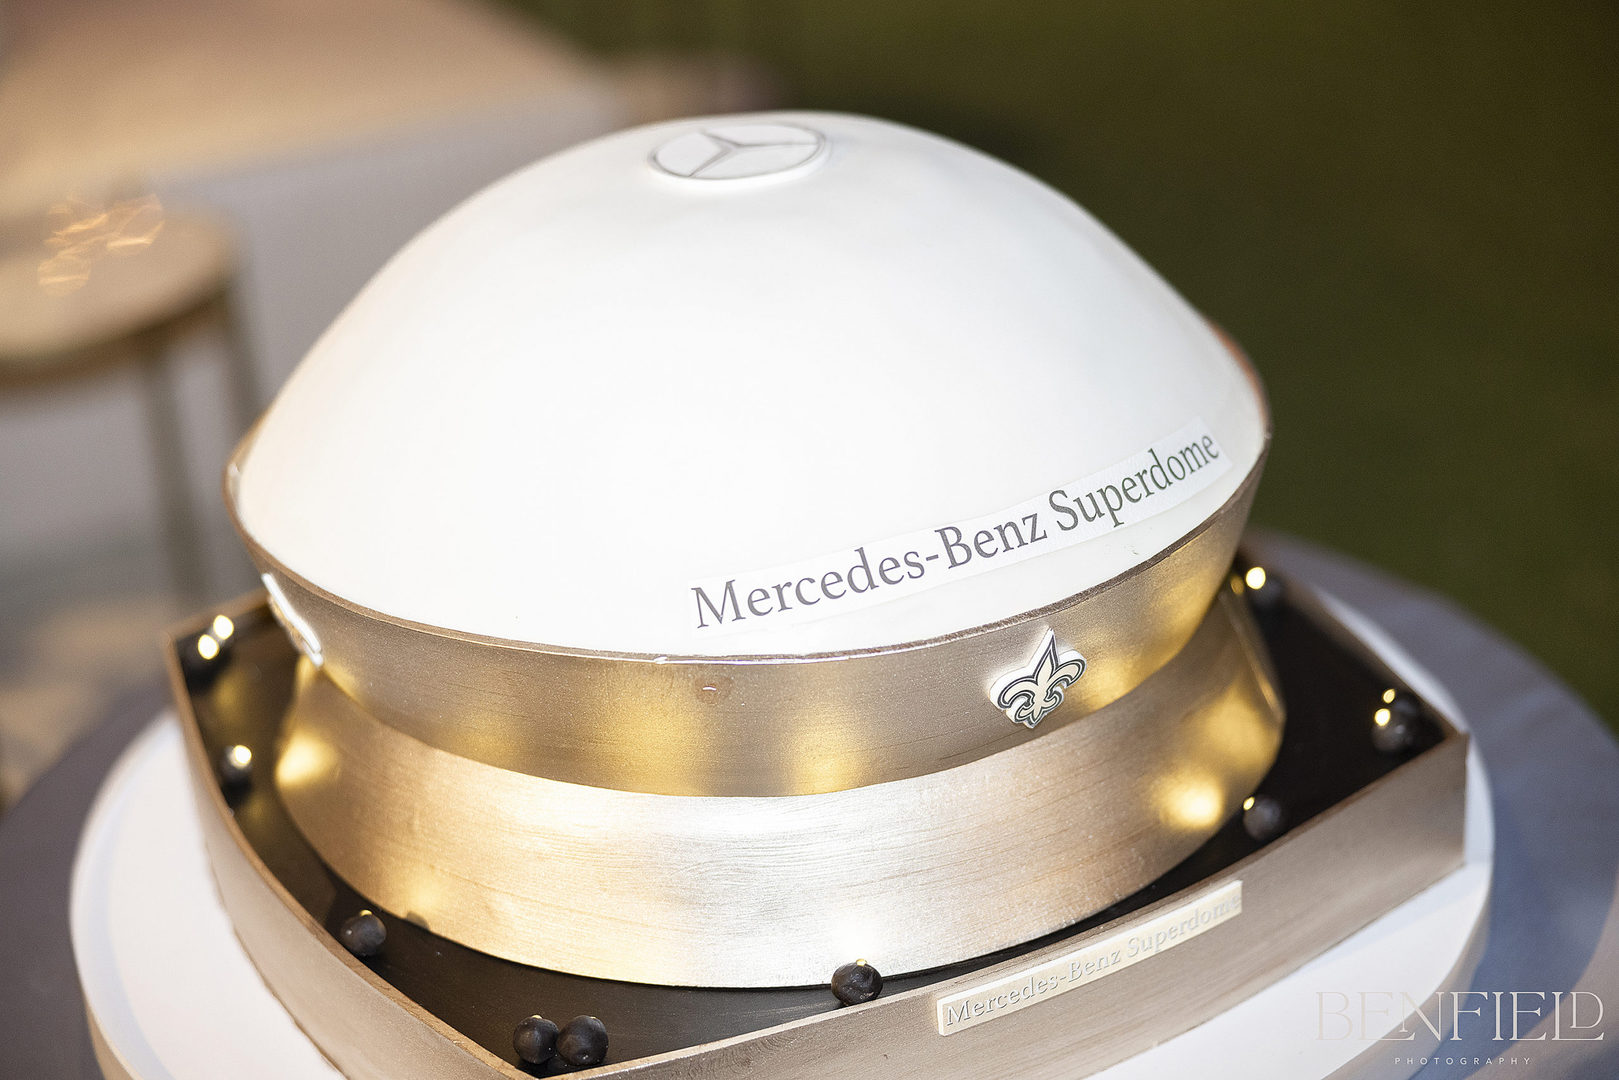 Mercedez Benz Superdome wedding cake for grooms cake at Hillside Estate Luxury Wedding Reception